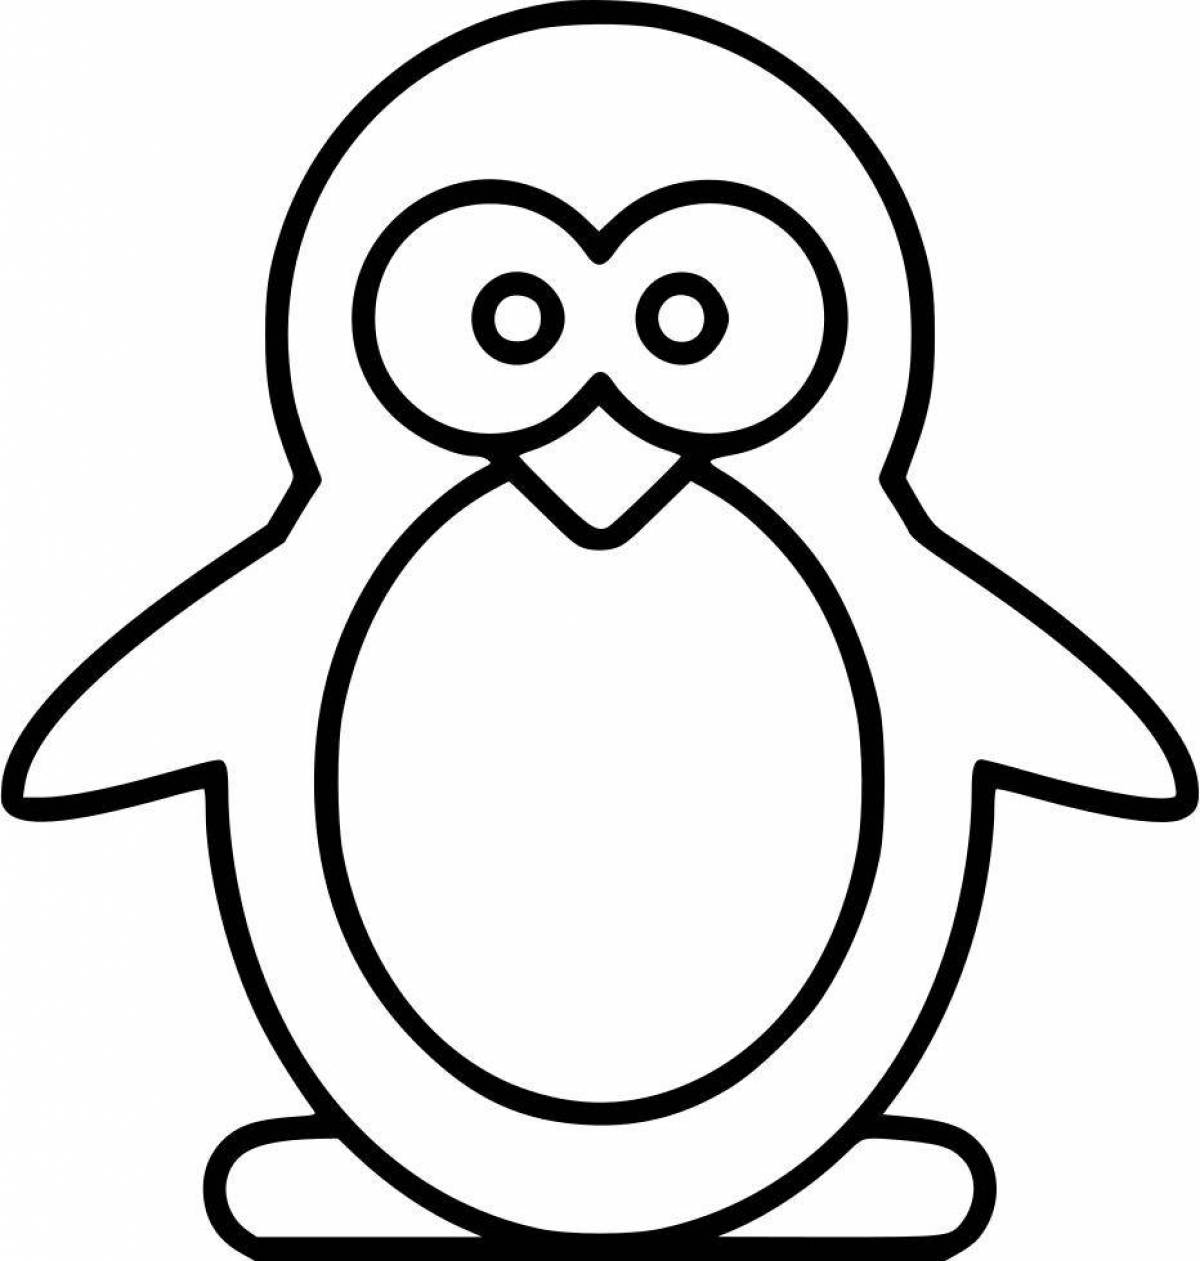 Penguin pattern #1